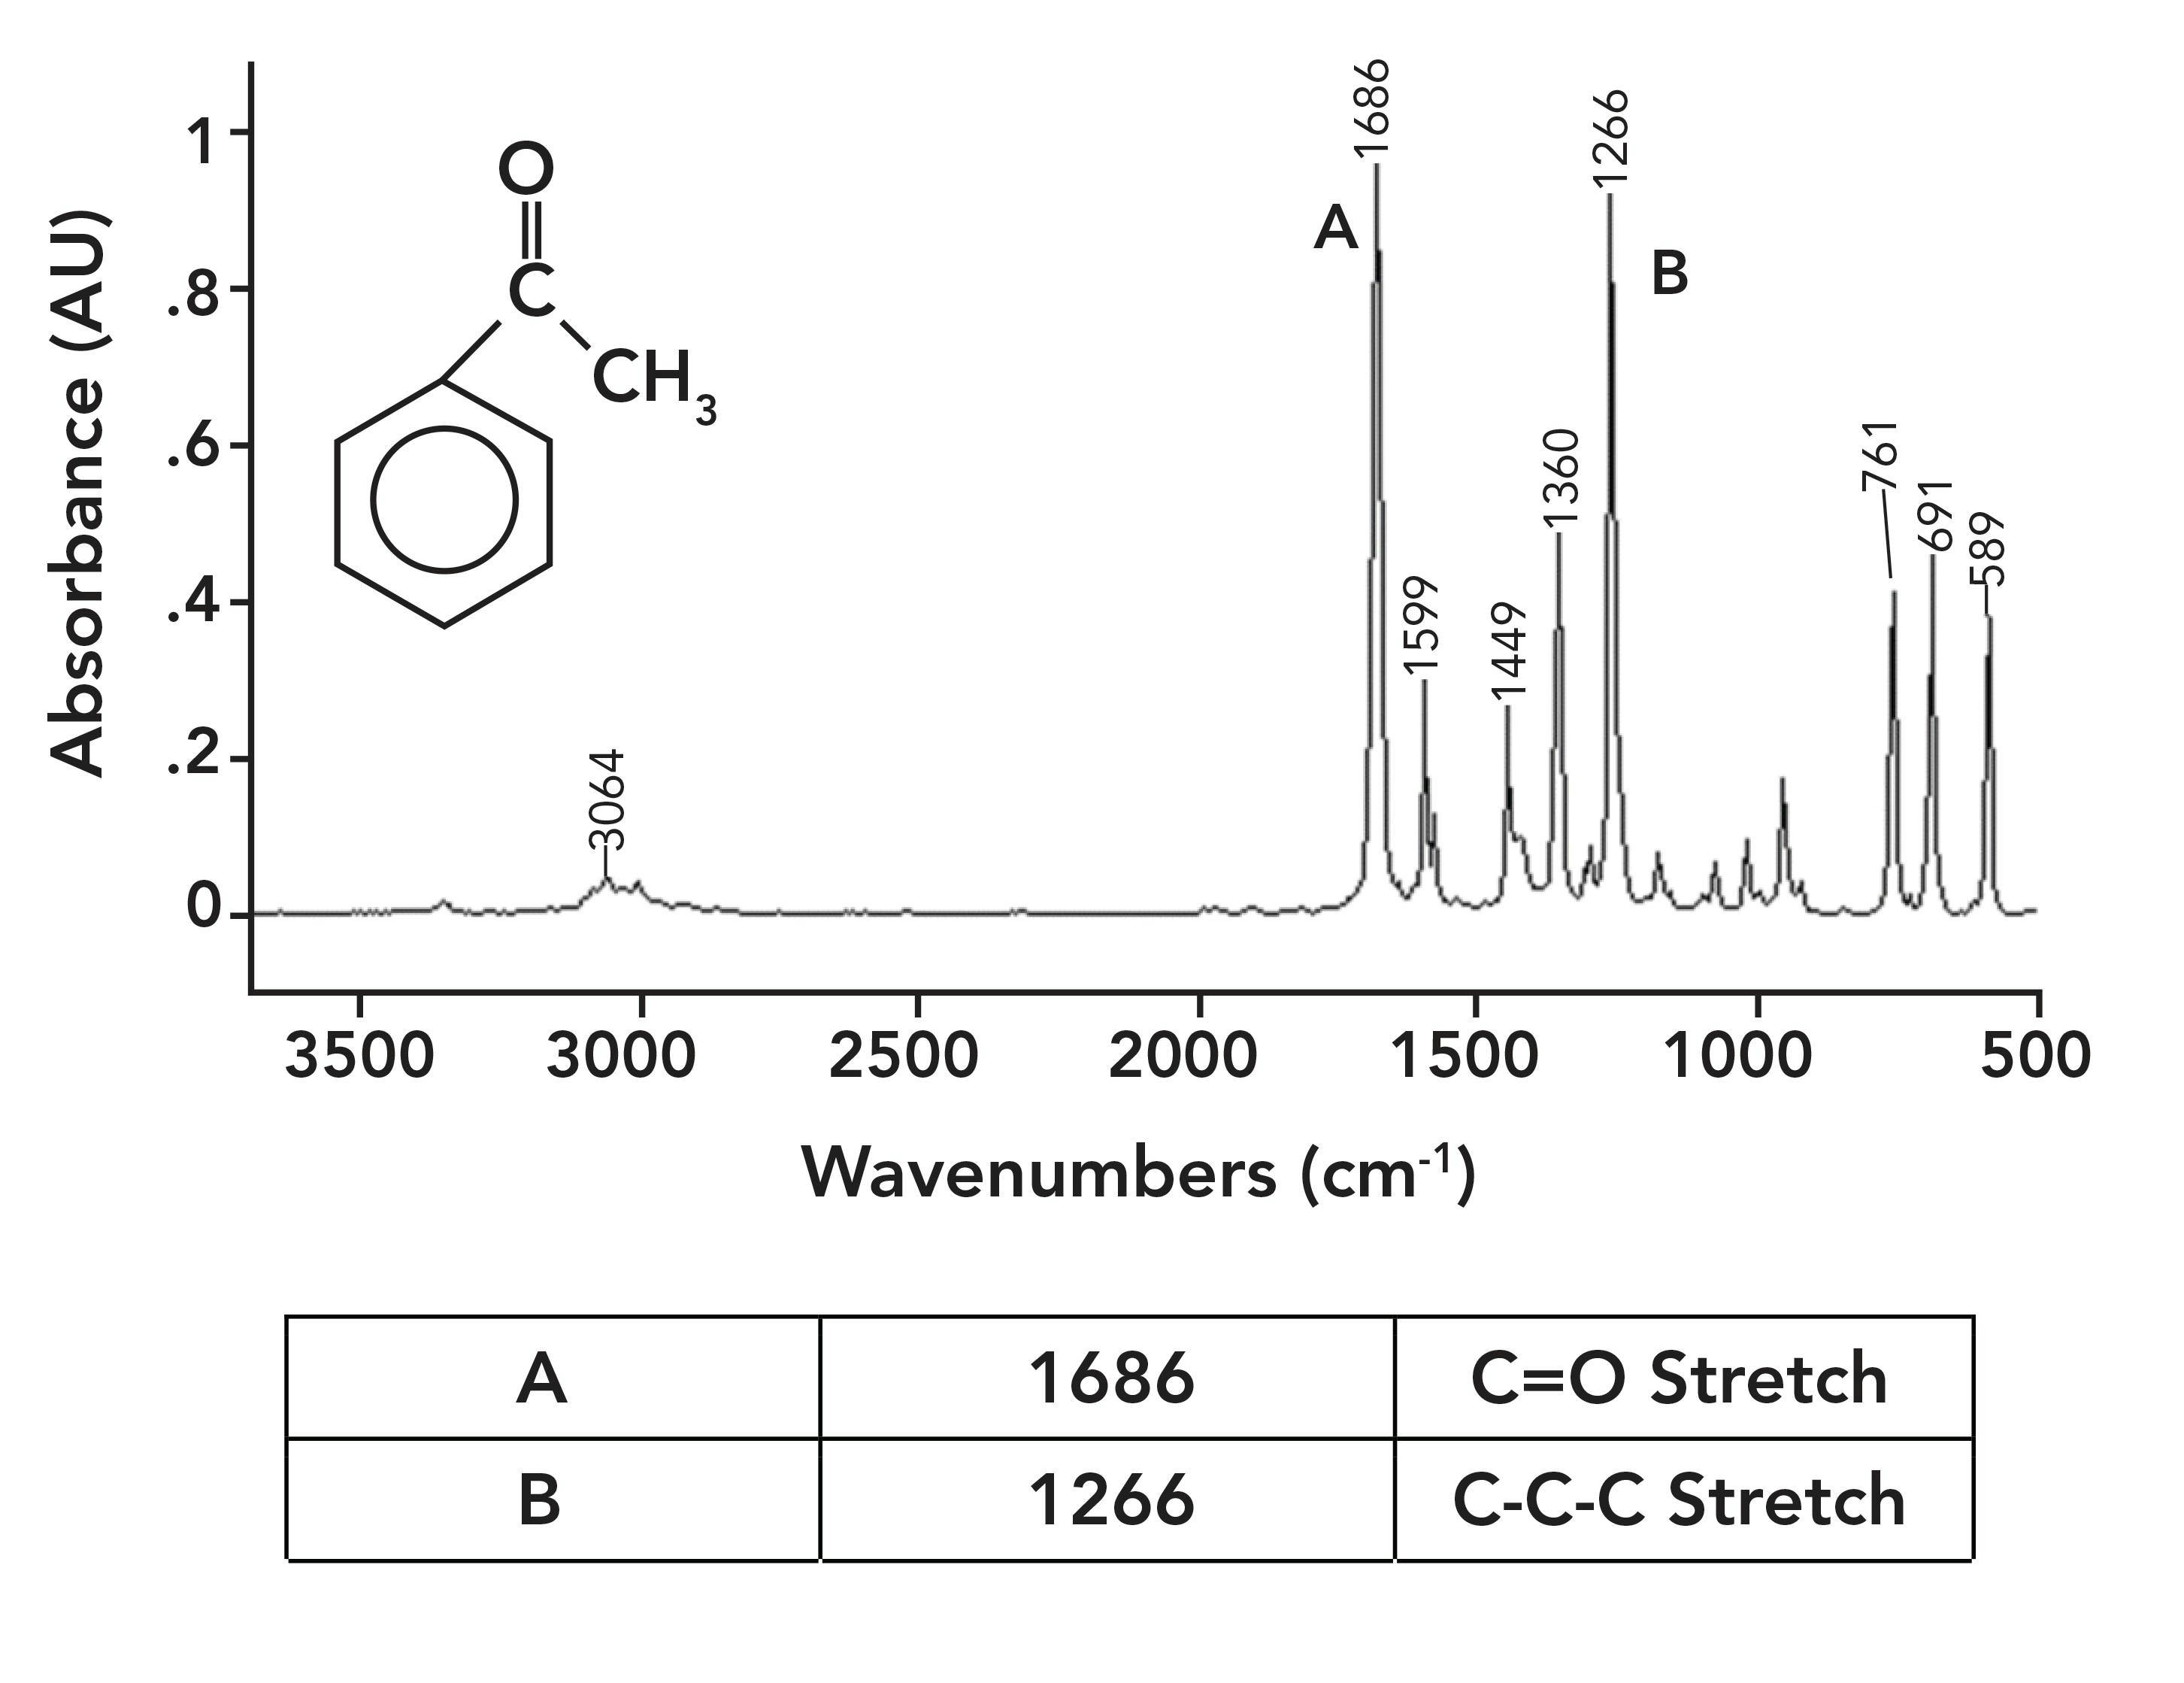 Figure 6: The IR spectrum of acetophenone (phenyl methyl ketone), C6H8O.